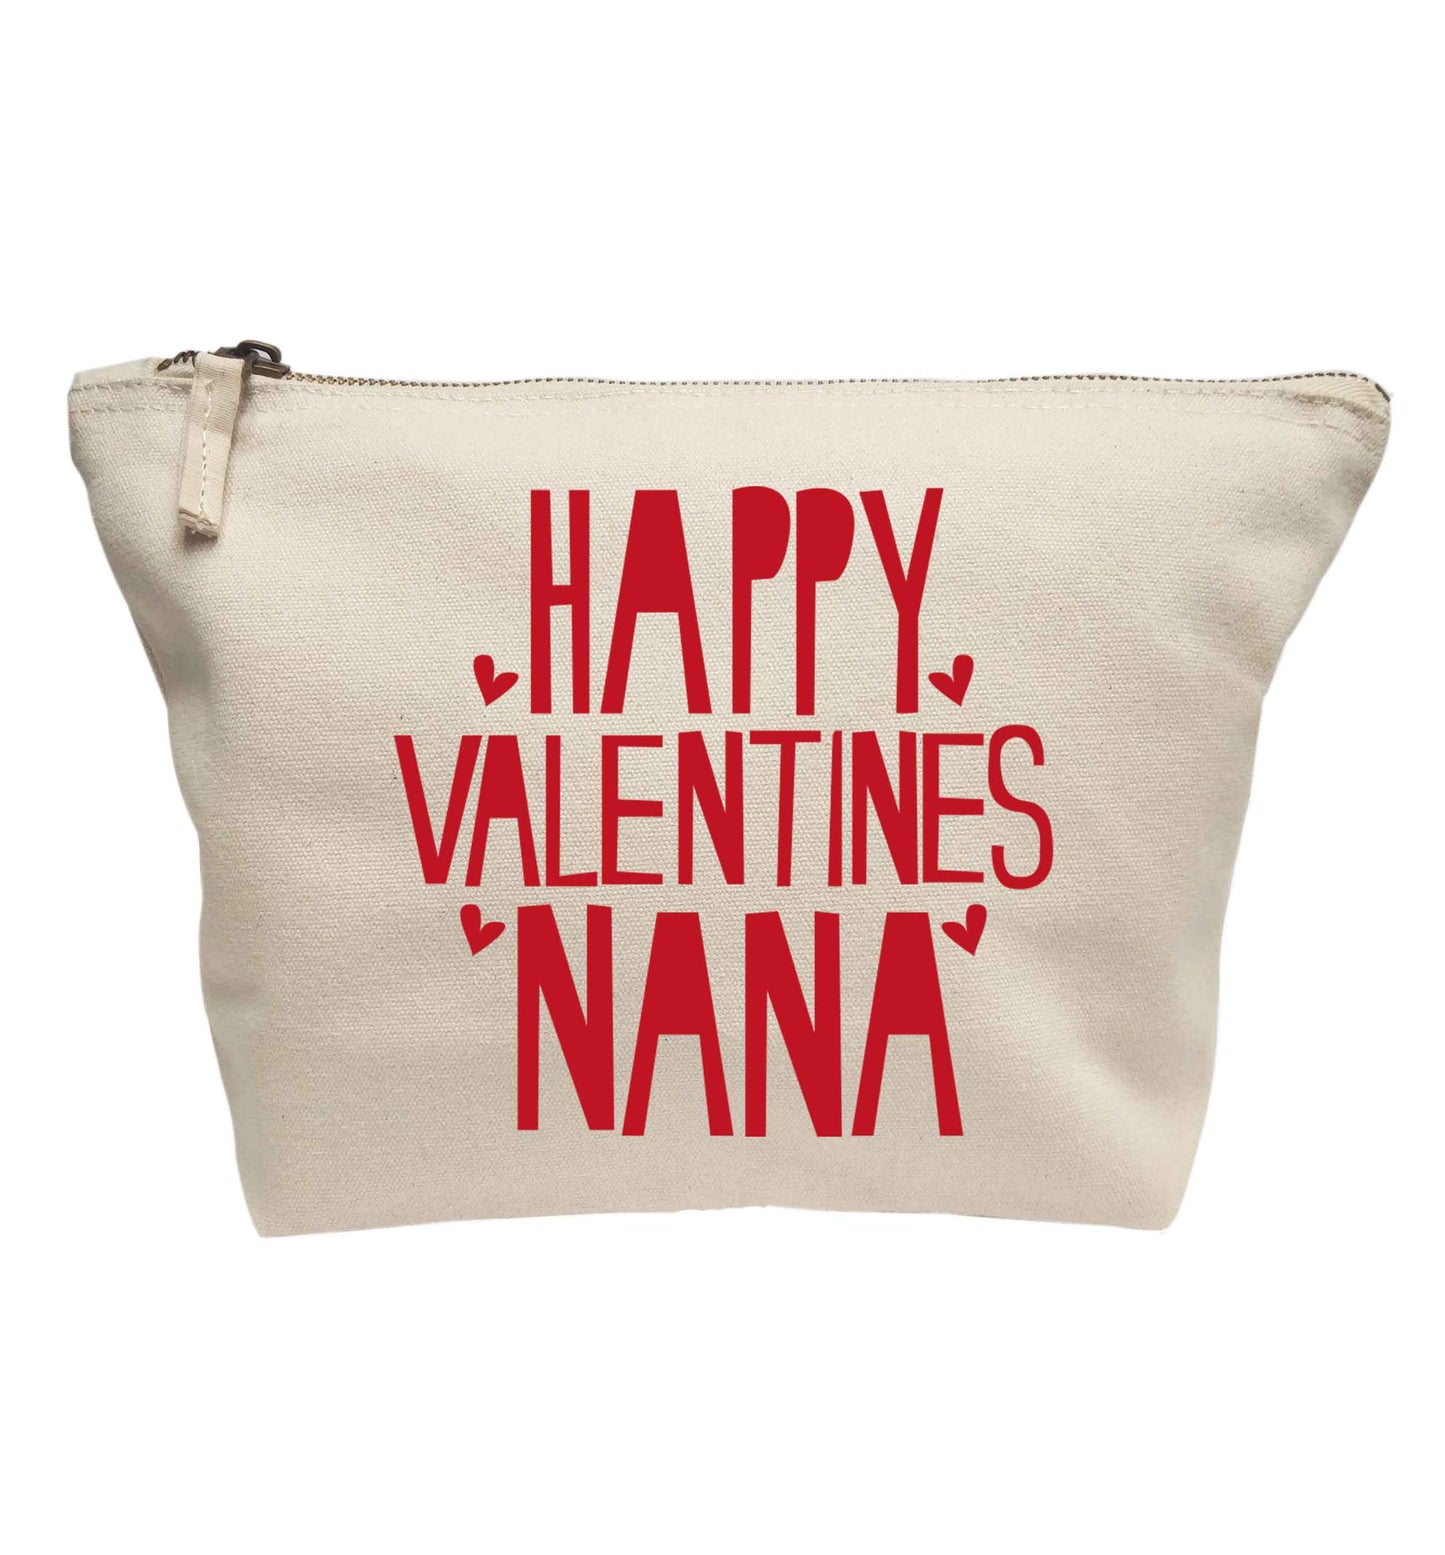 Happy valentines nana | Makeup / wash bag